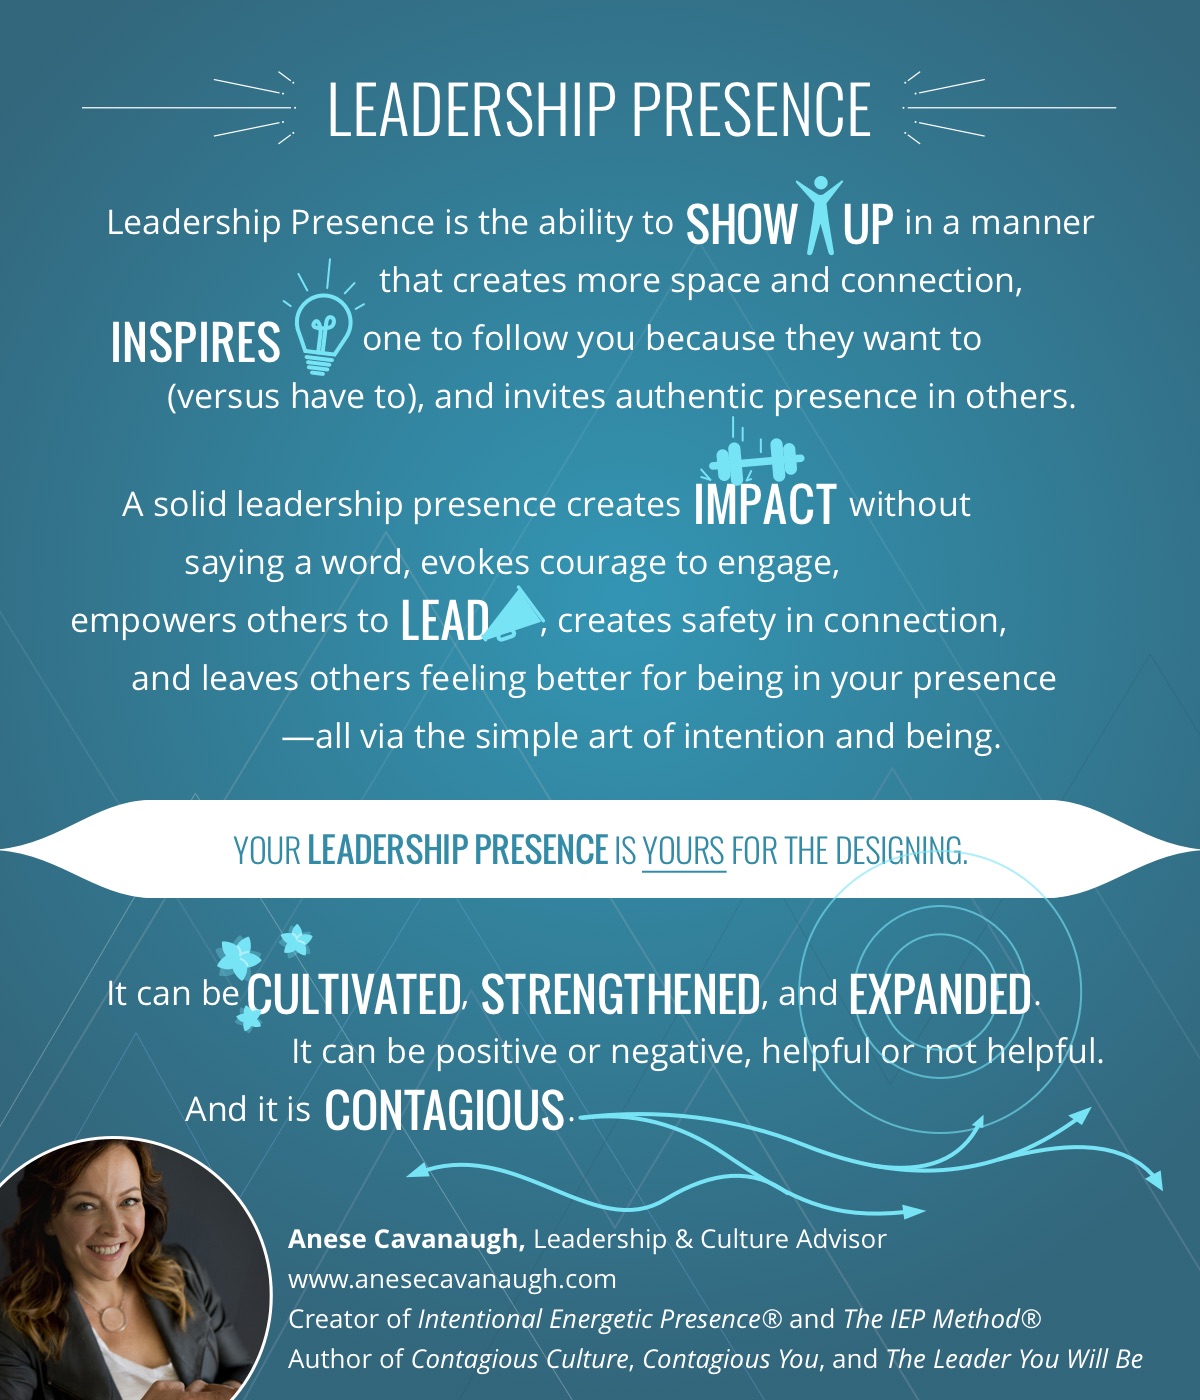 Definition of Leadership Presence